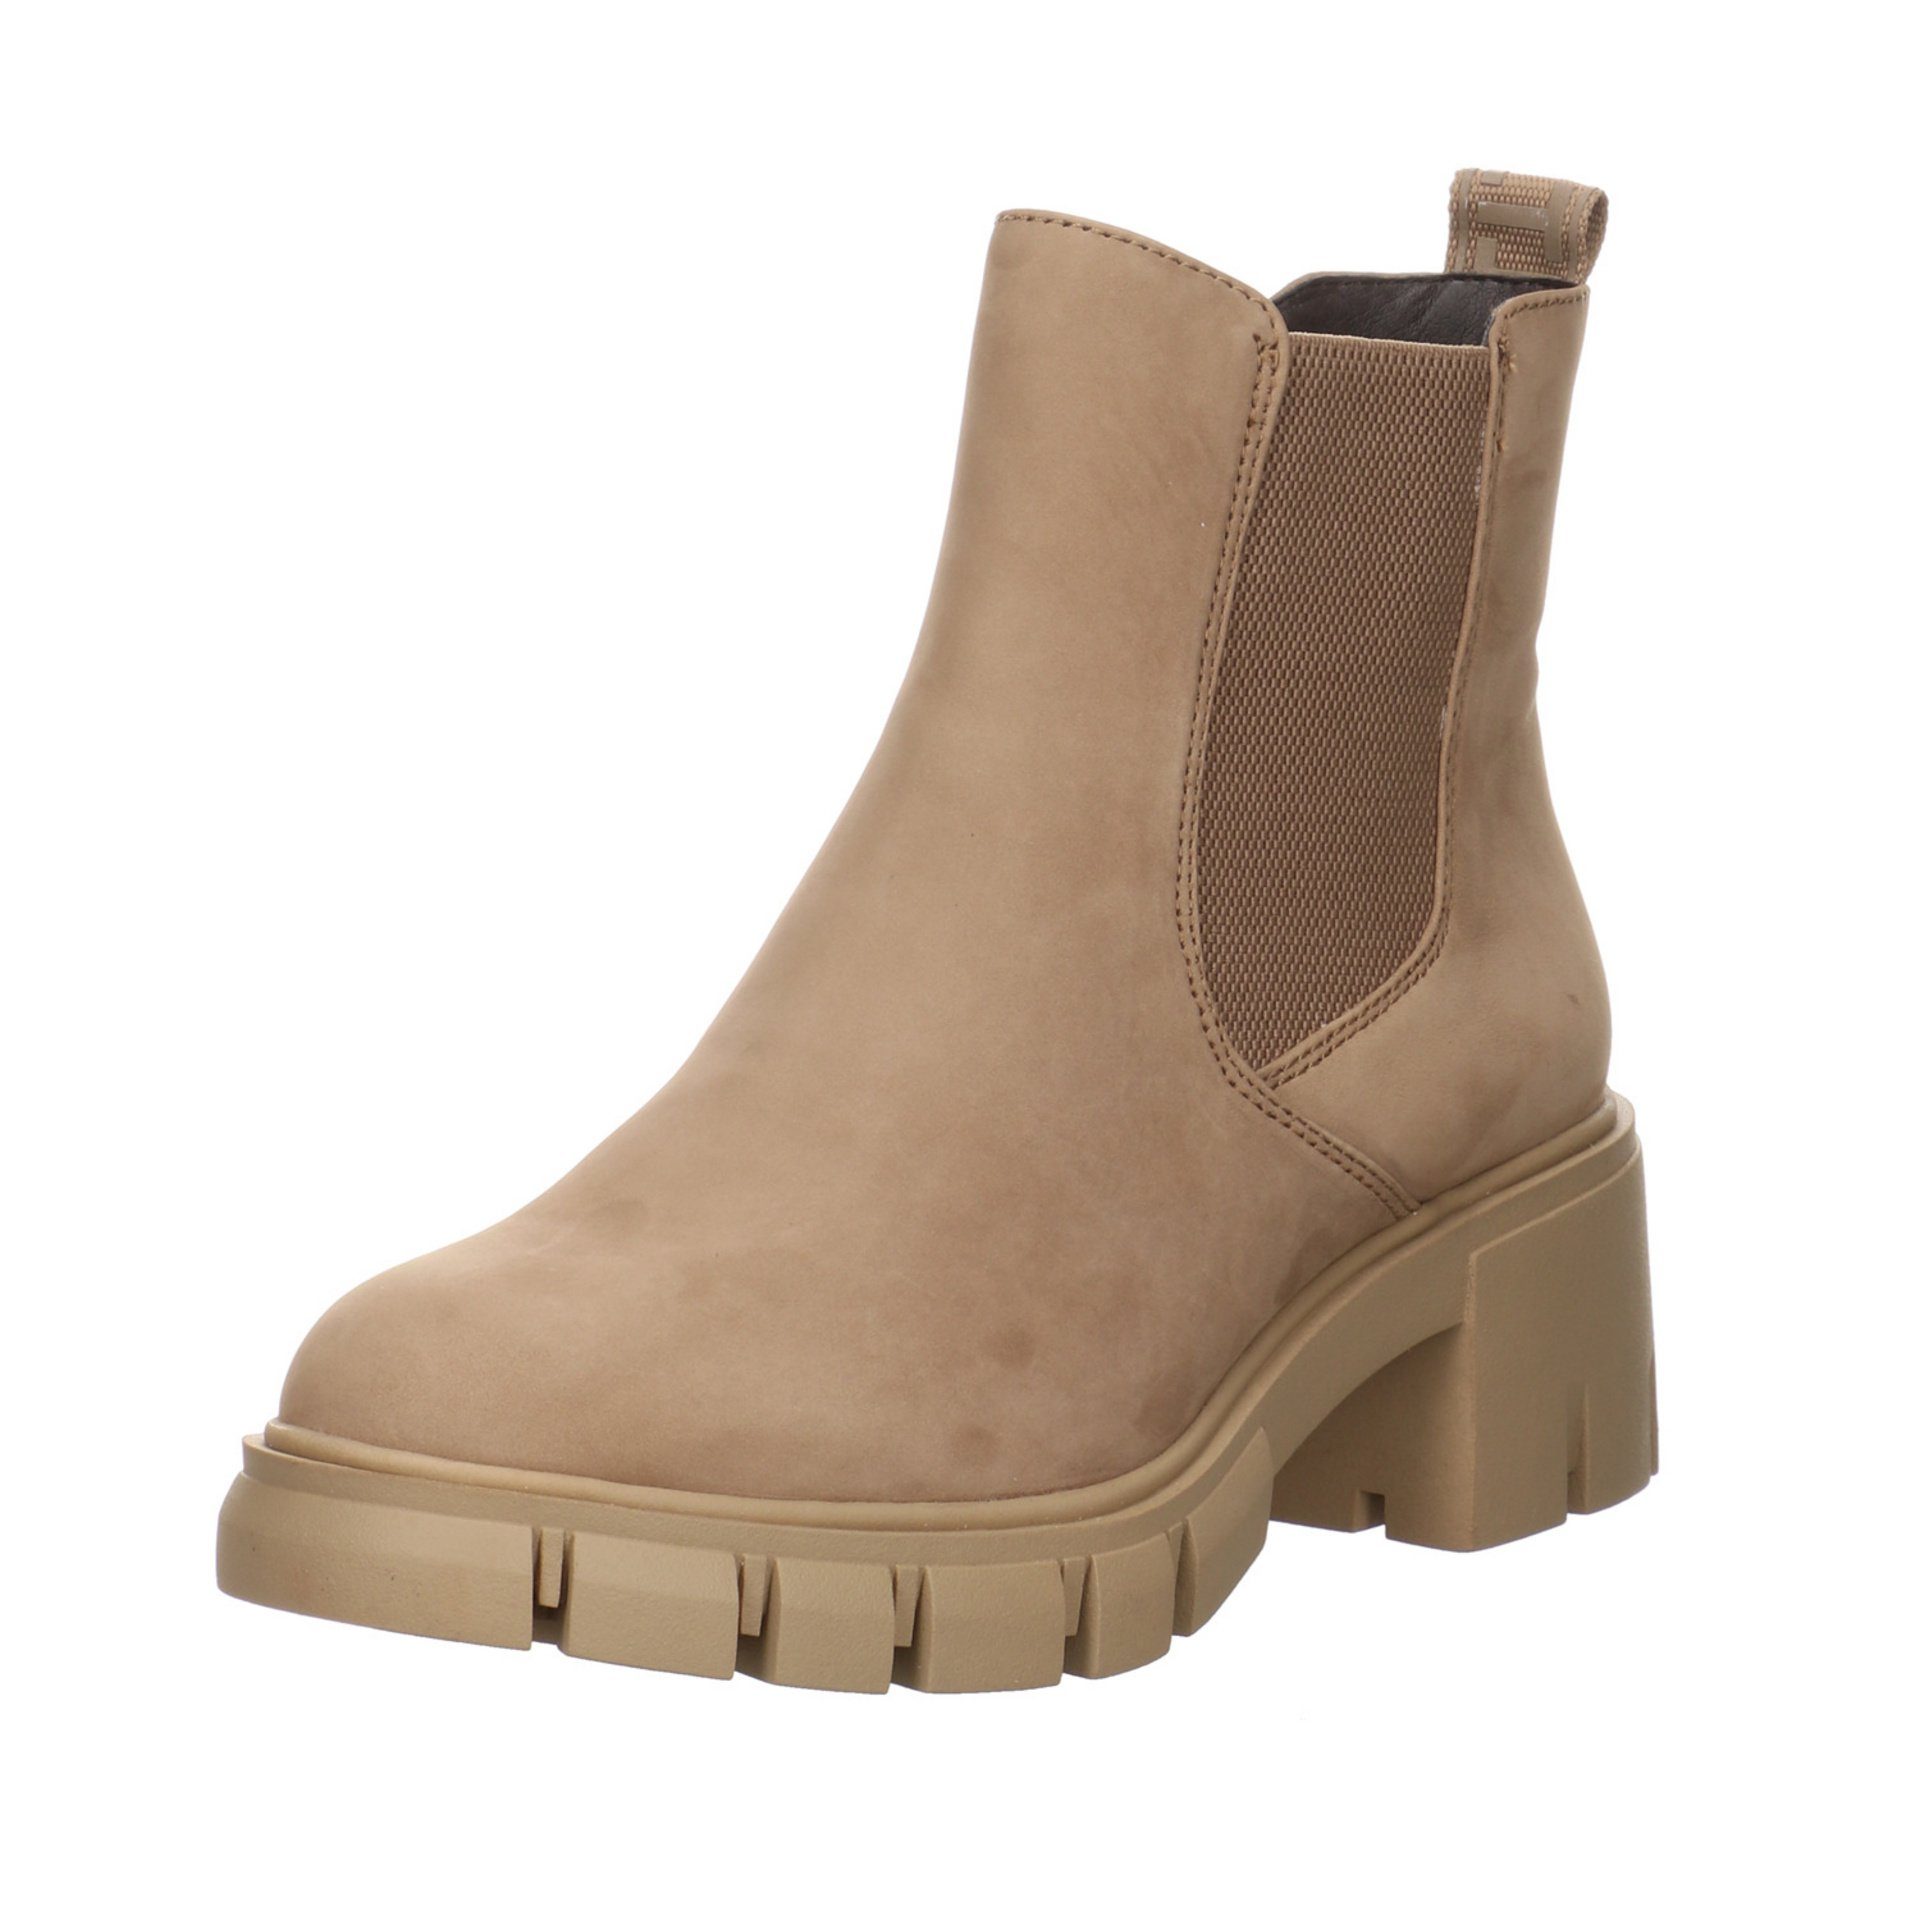 Tamaris Damen Stiefeletten Stiefelette Beige Chelsea (21203969) Leder-/Textilkombination Schuhe Boots